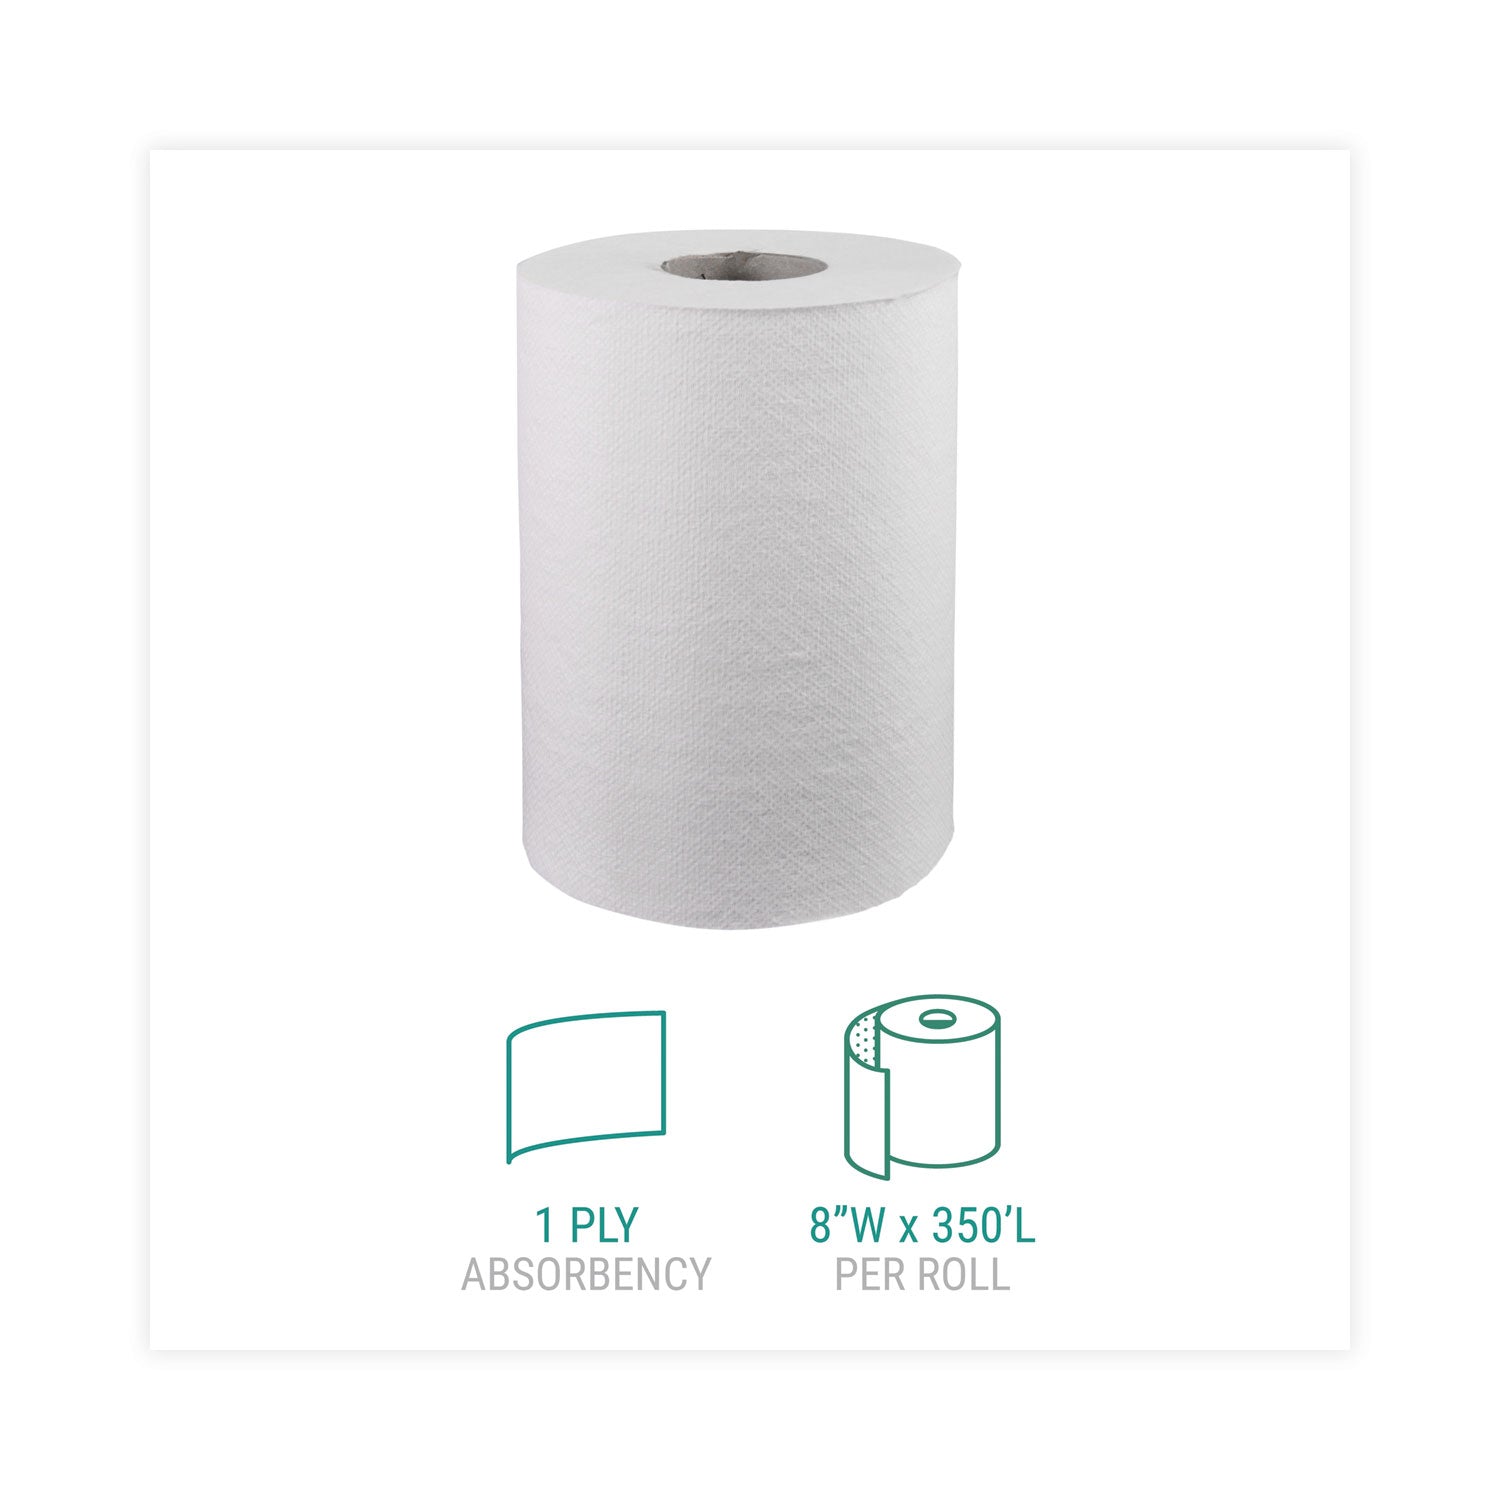 hardwound-roll-towels-1-ply-8-x-350-ft-white-12-rolls-carton_win109b - 2